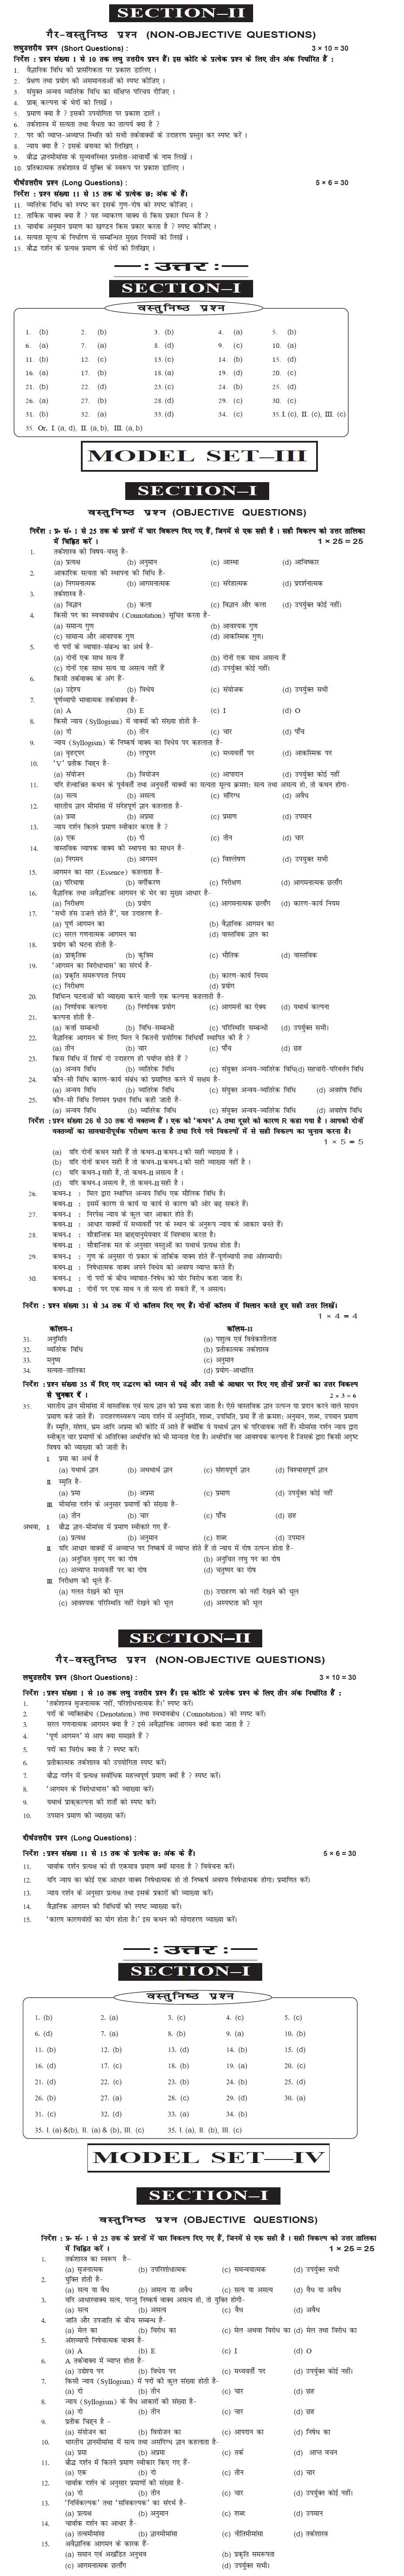 Bihar Board Class XI Arts Model Question Papers - Philosophy